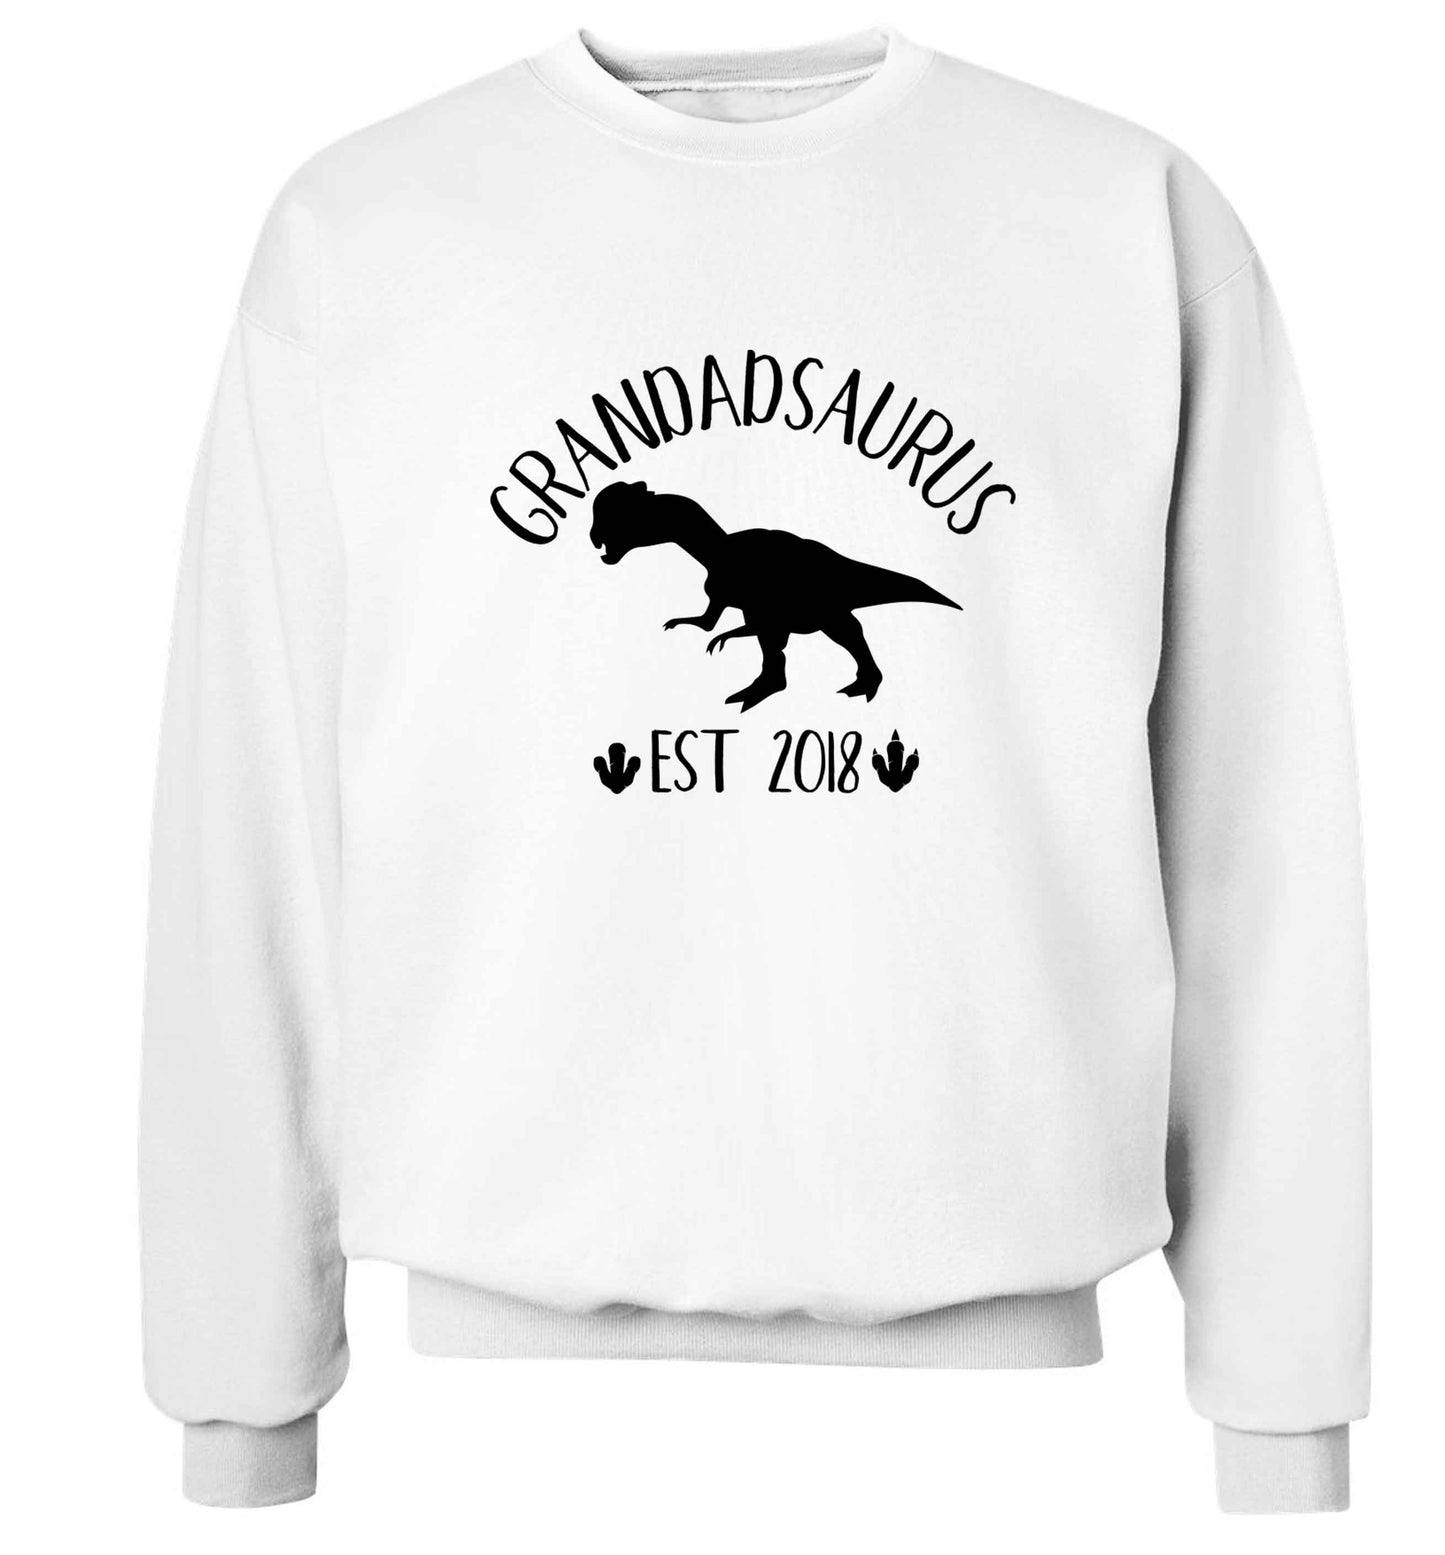 Personalised grandadsaurus since (custom date) Adult's unisex white Sweater 2XL